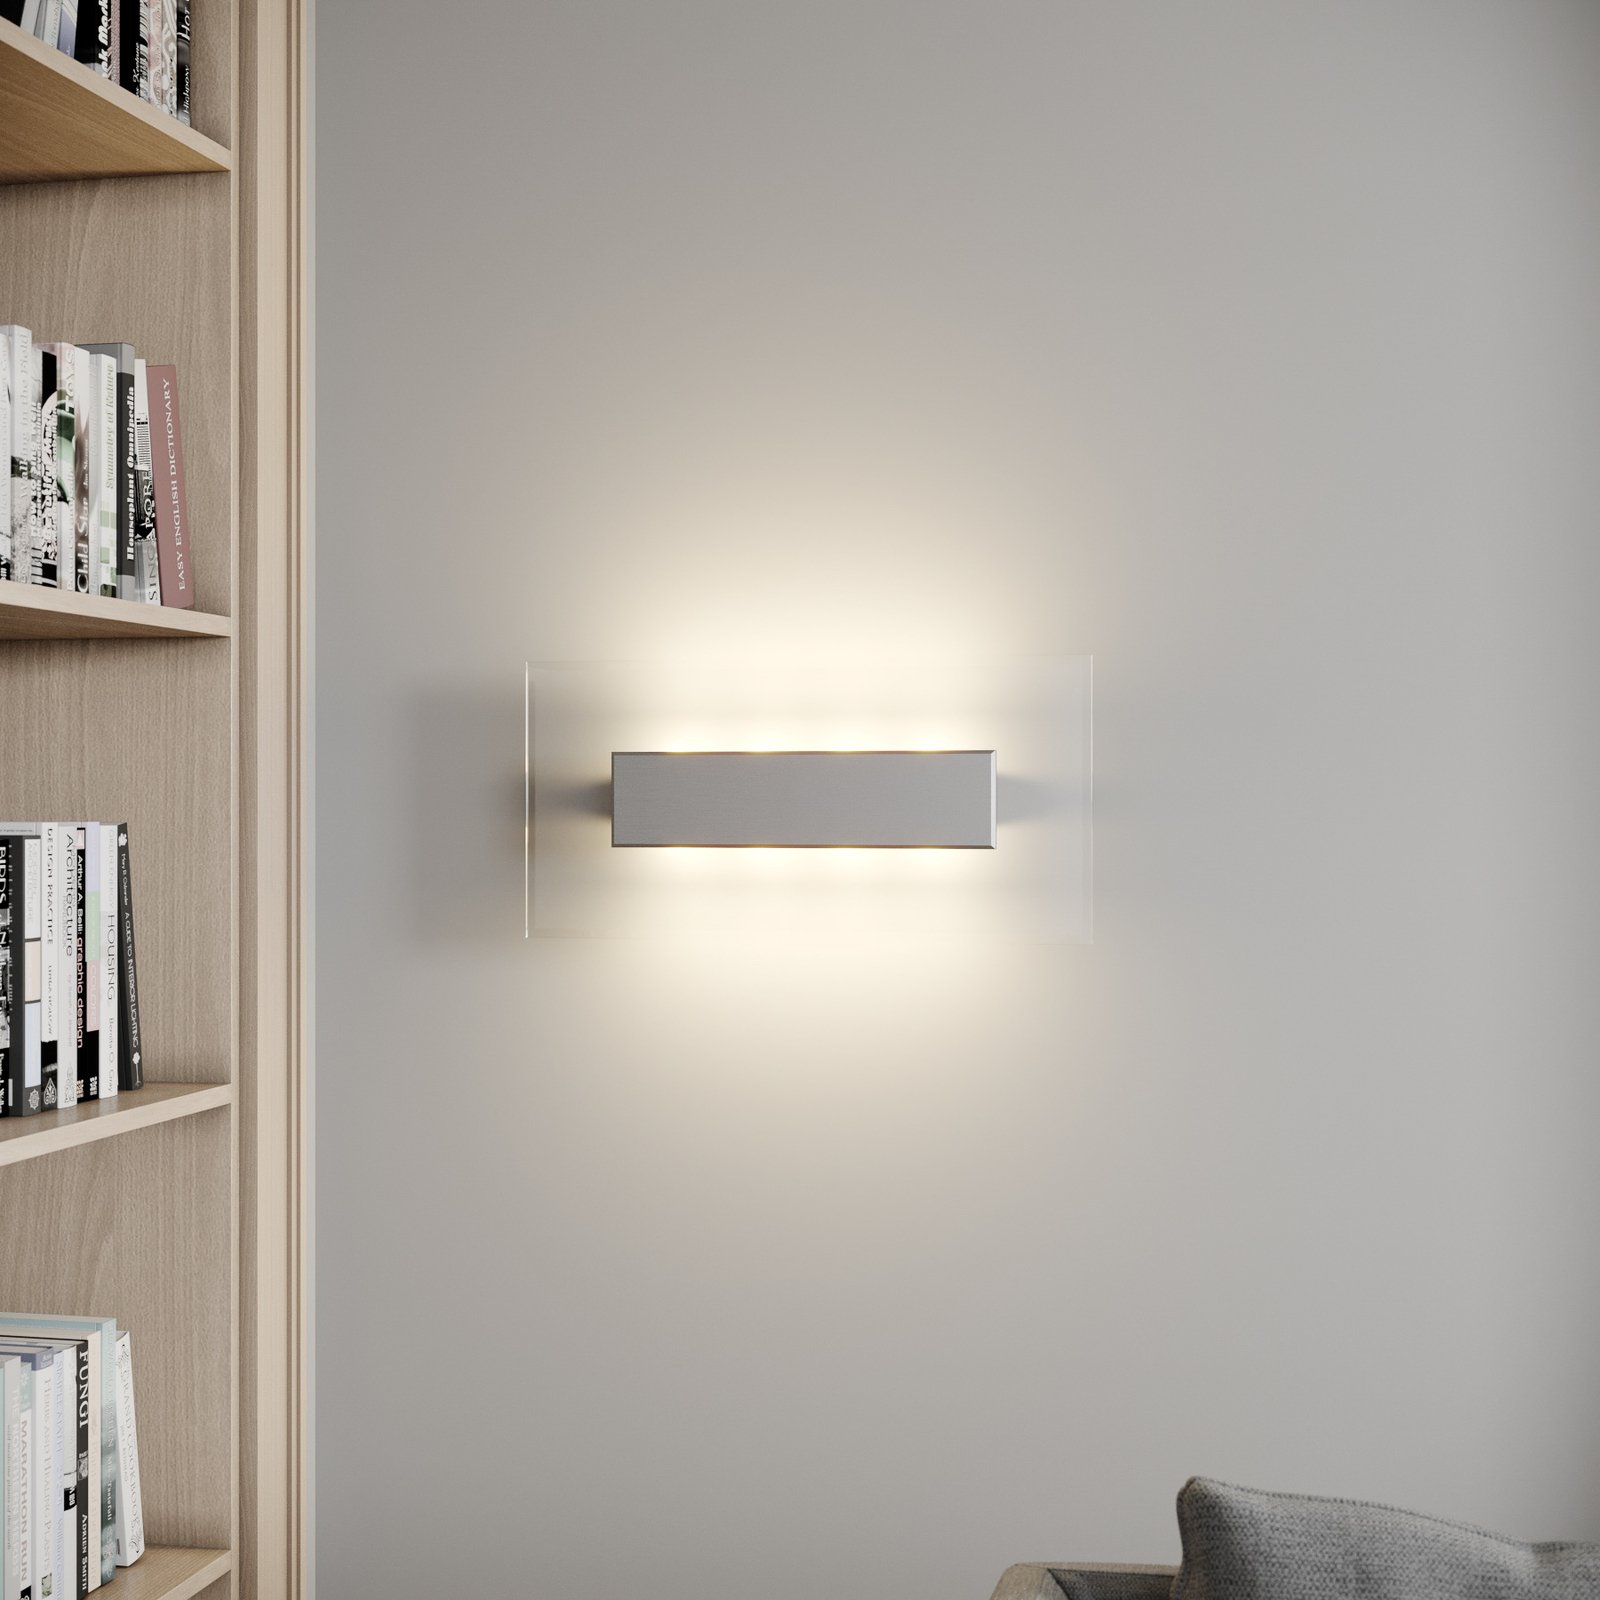 Quitani LED wall light Lole, aluminium, 59 x 29 cm, glass